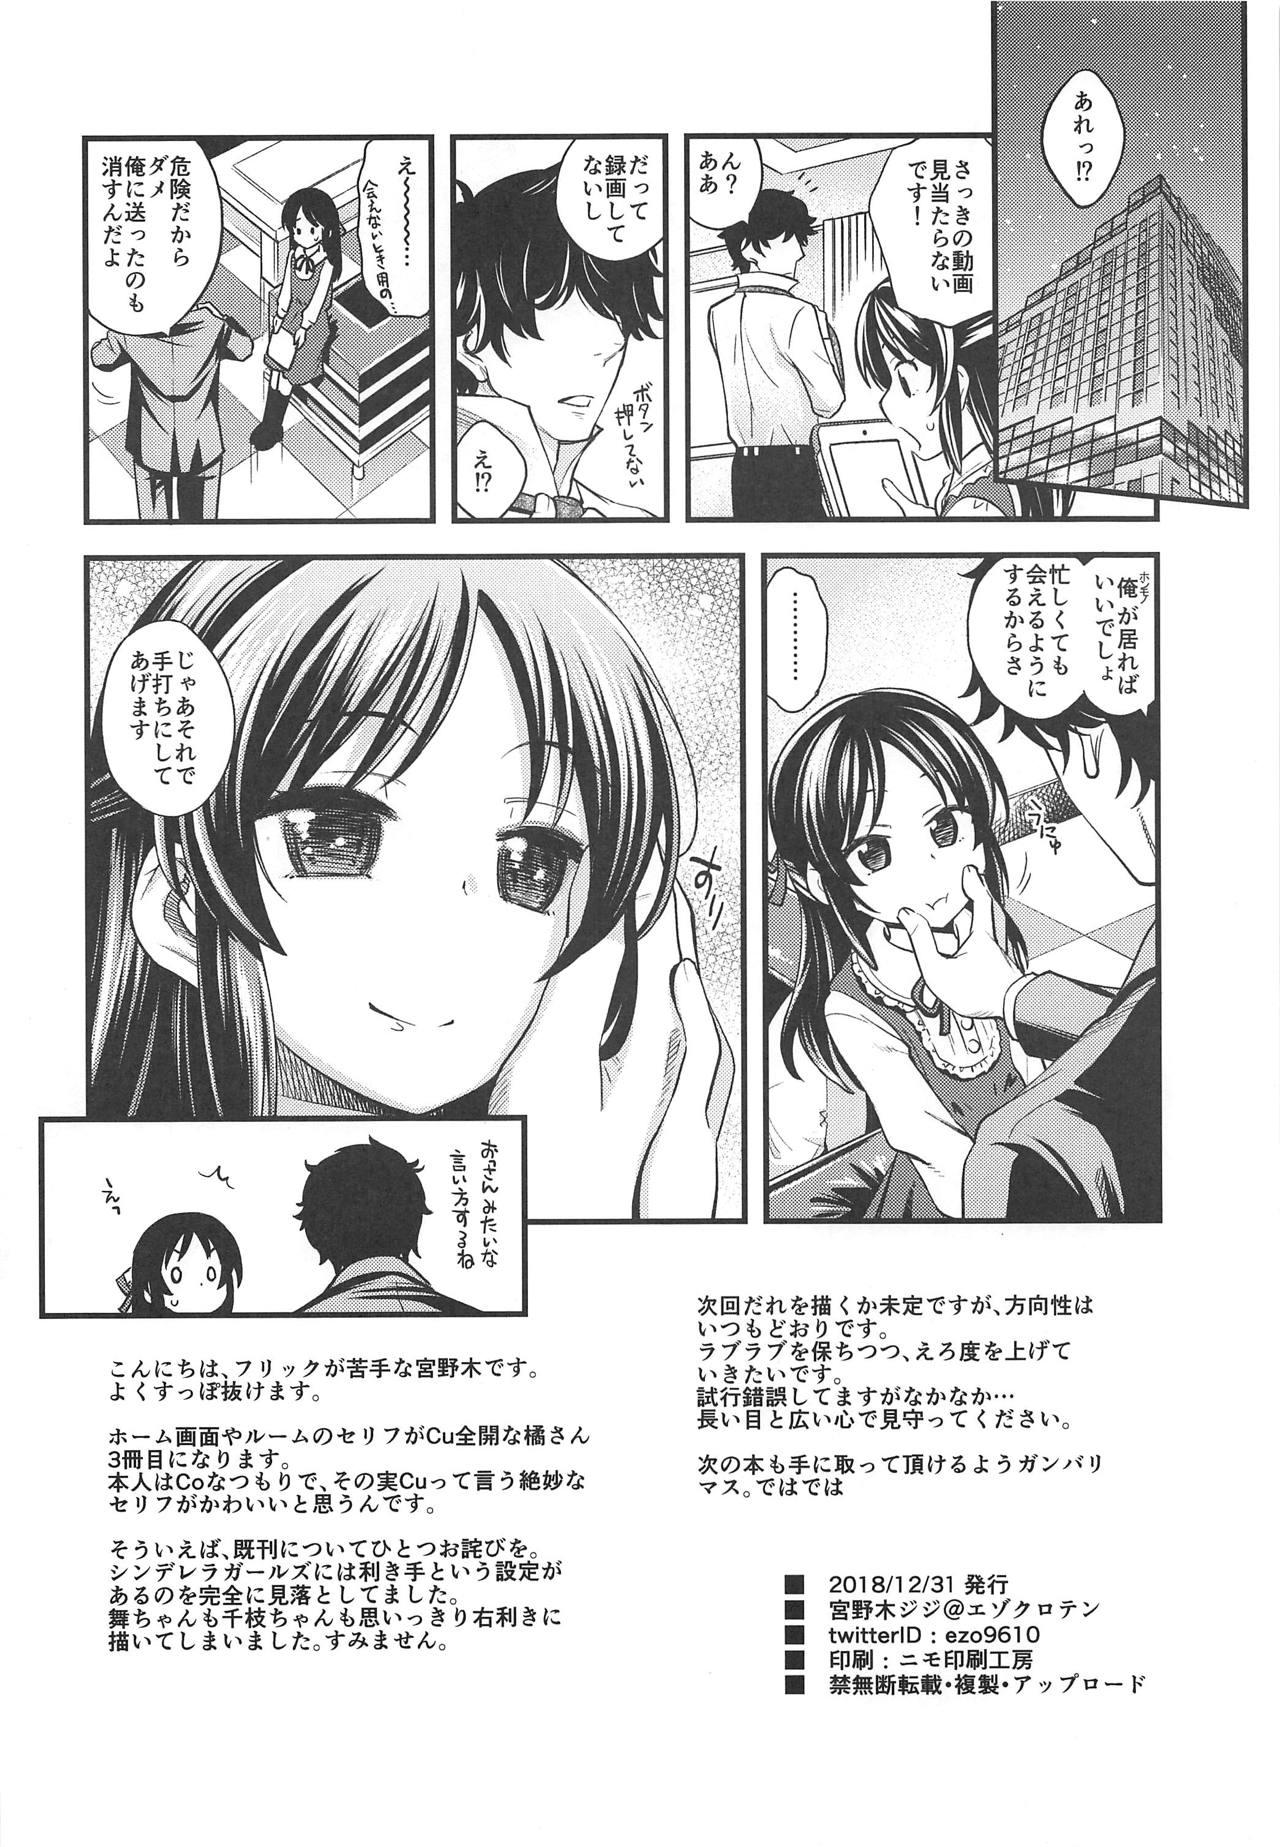 Mamando Warui Ko Arisu 3 - The idolmaster Roleplay - Page 25